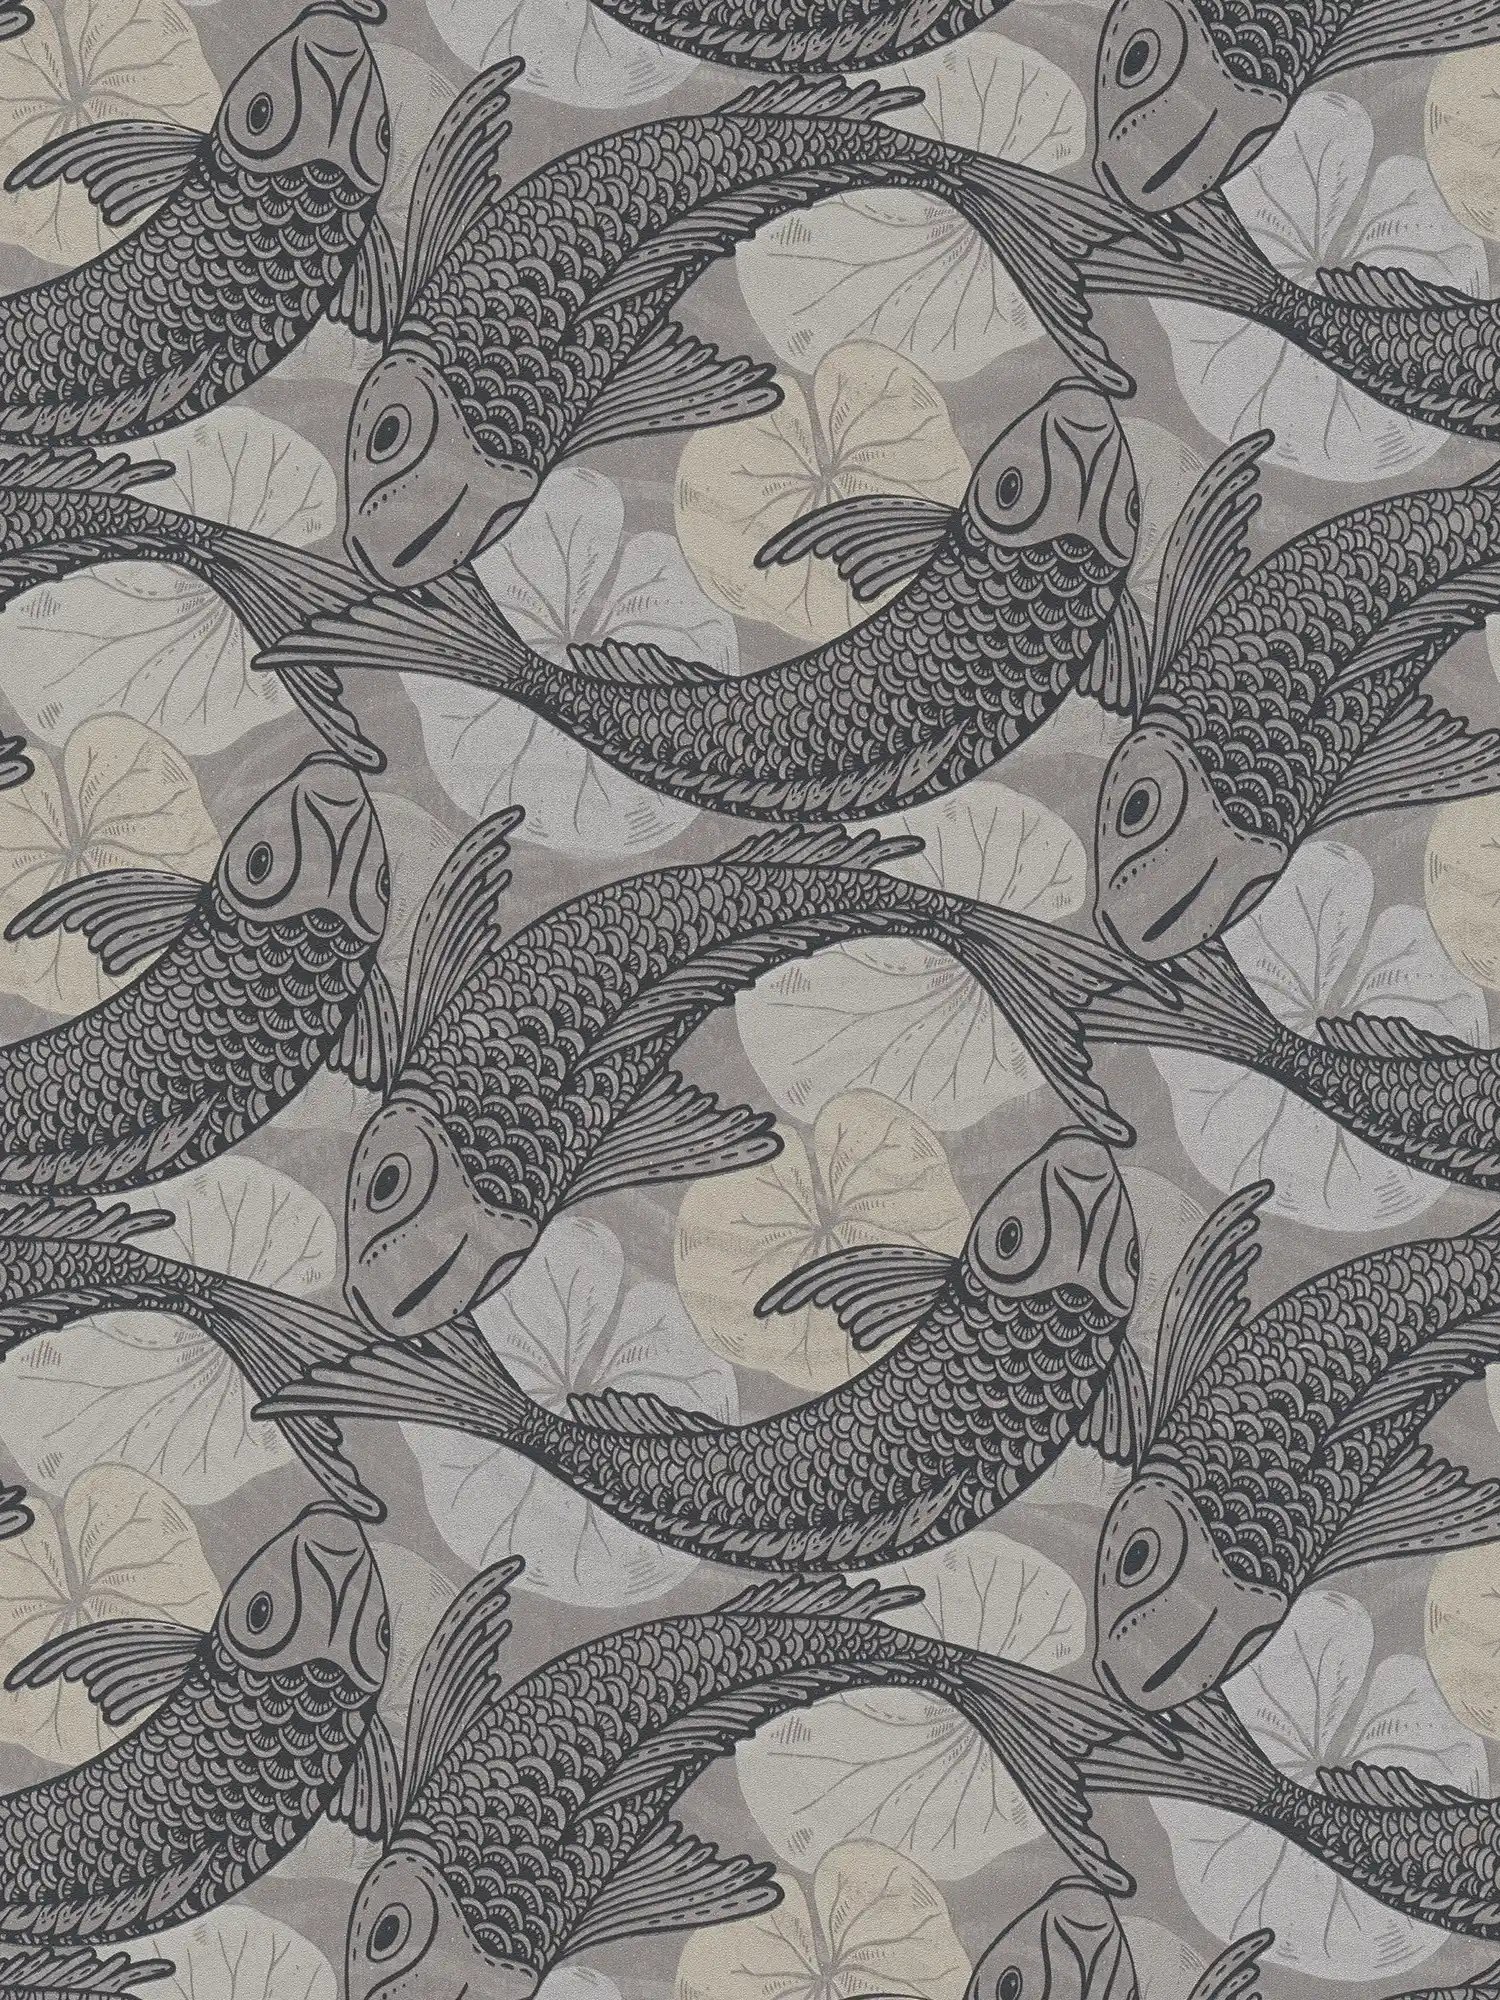         Tapete Asian Design mit Koi Motiv & Metallic-Effekt – Beige, Grau, Schwarz
    